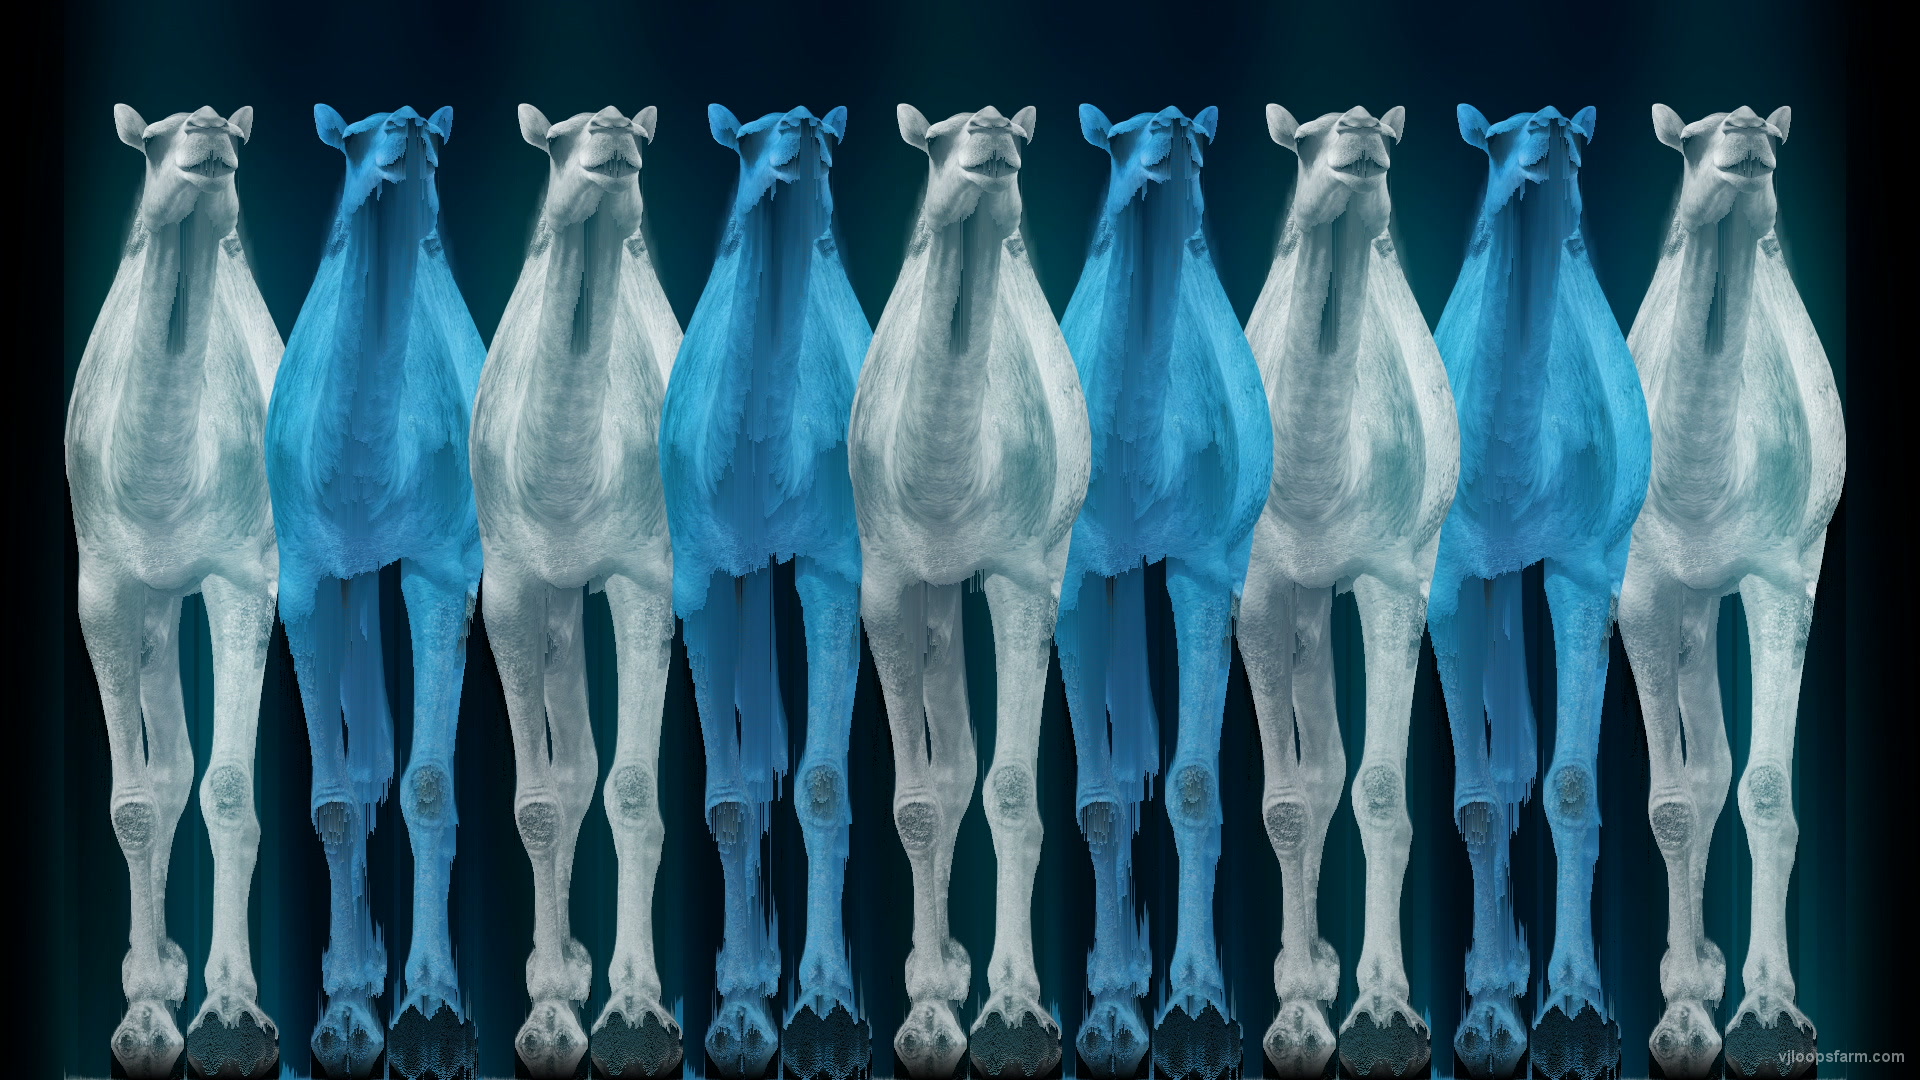 Camel Team Full Size 3D Blue Glow Animal Video Art VJ Loop